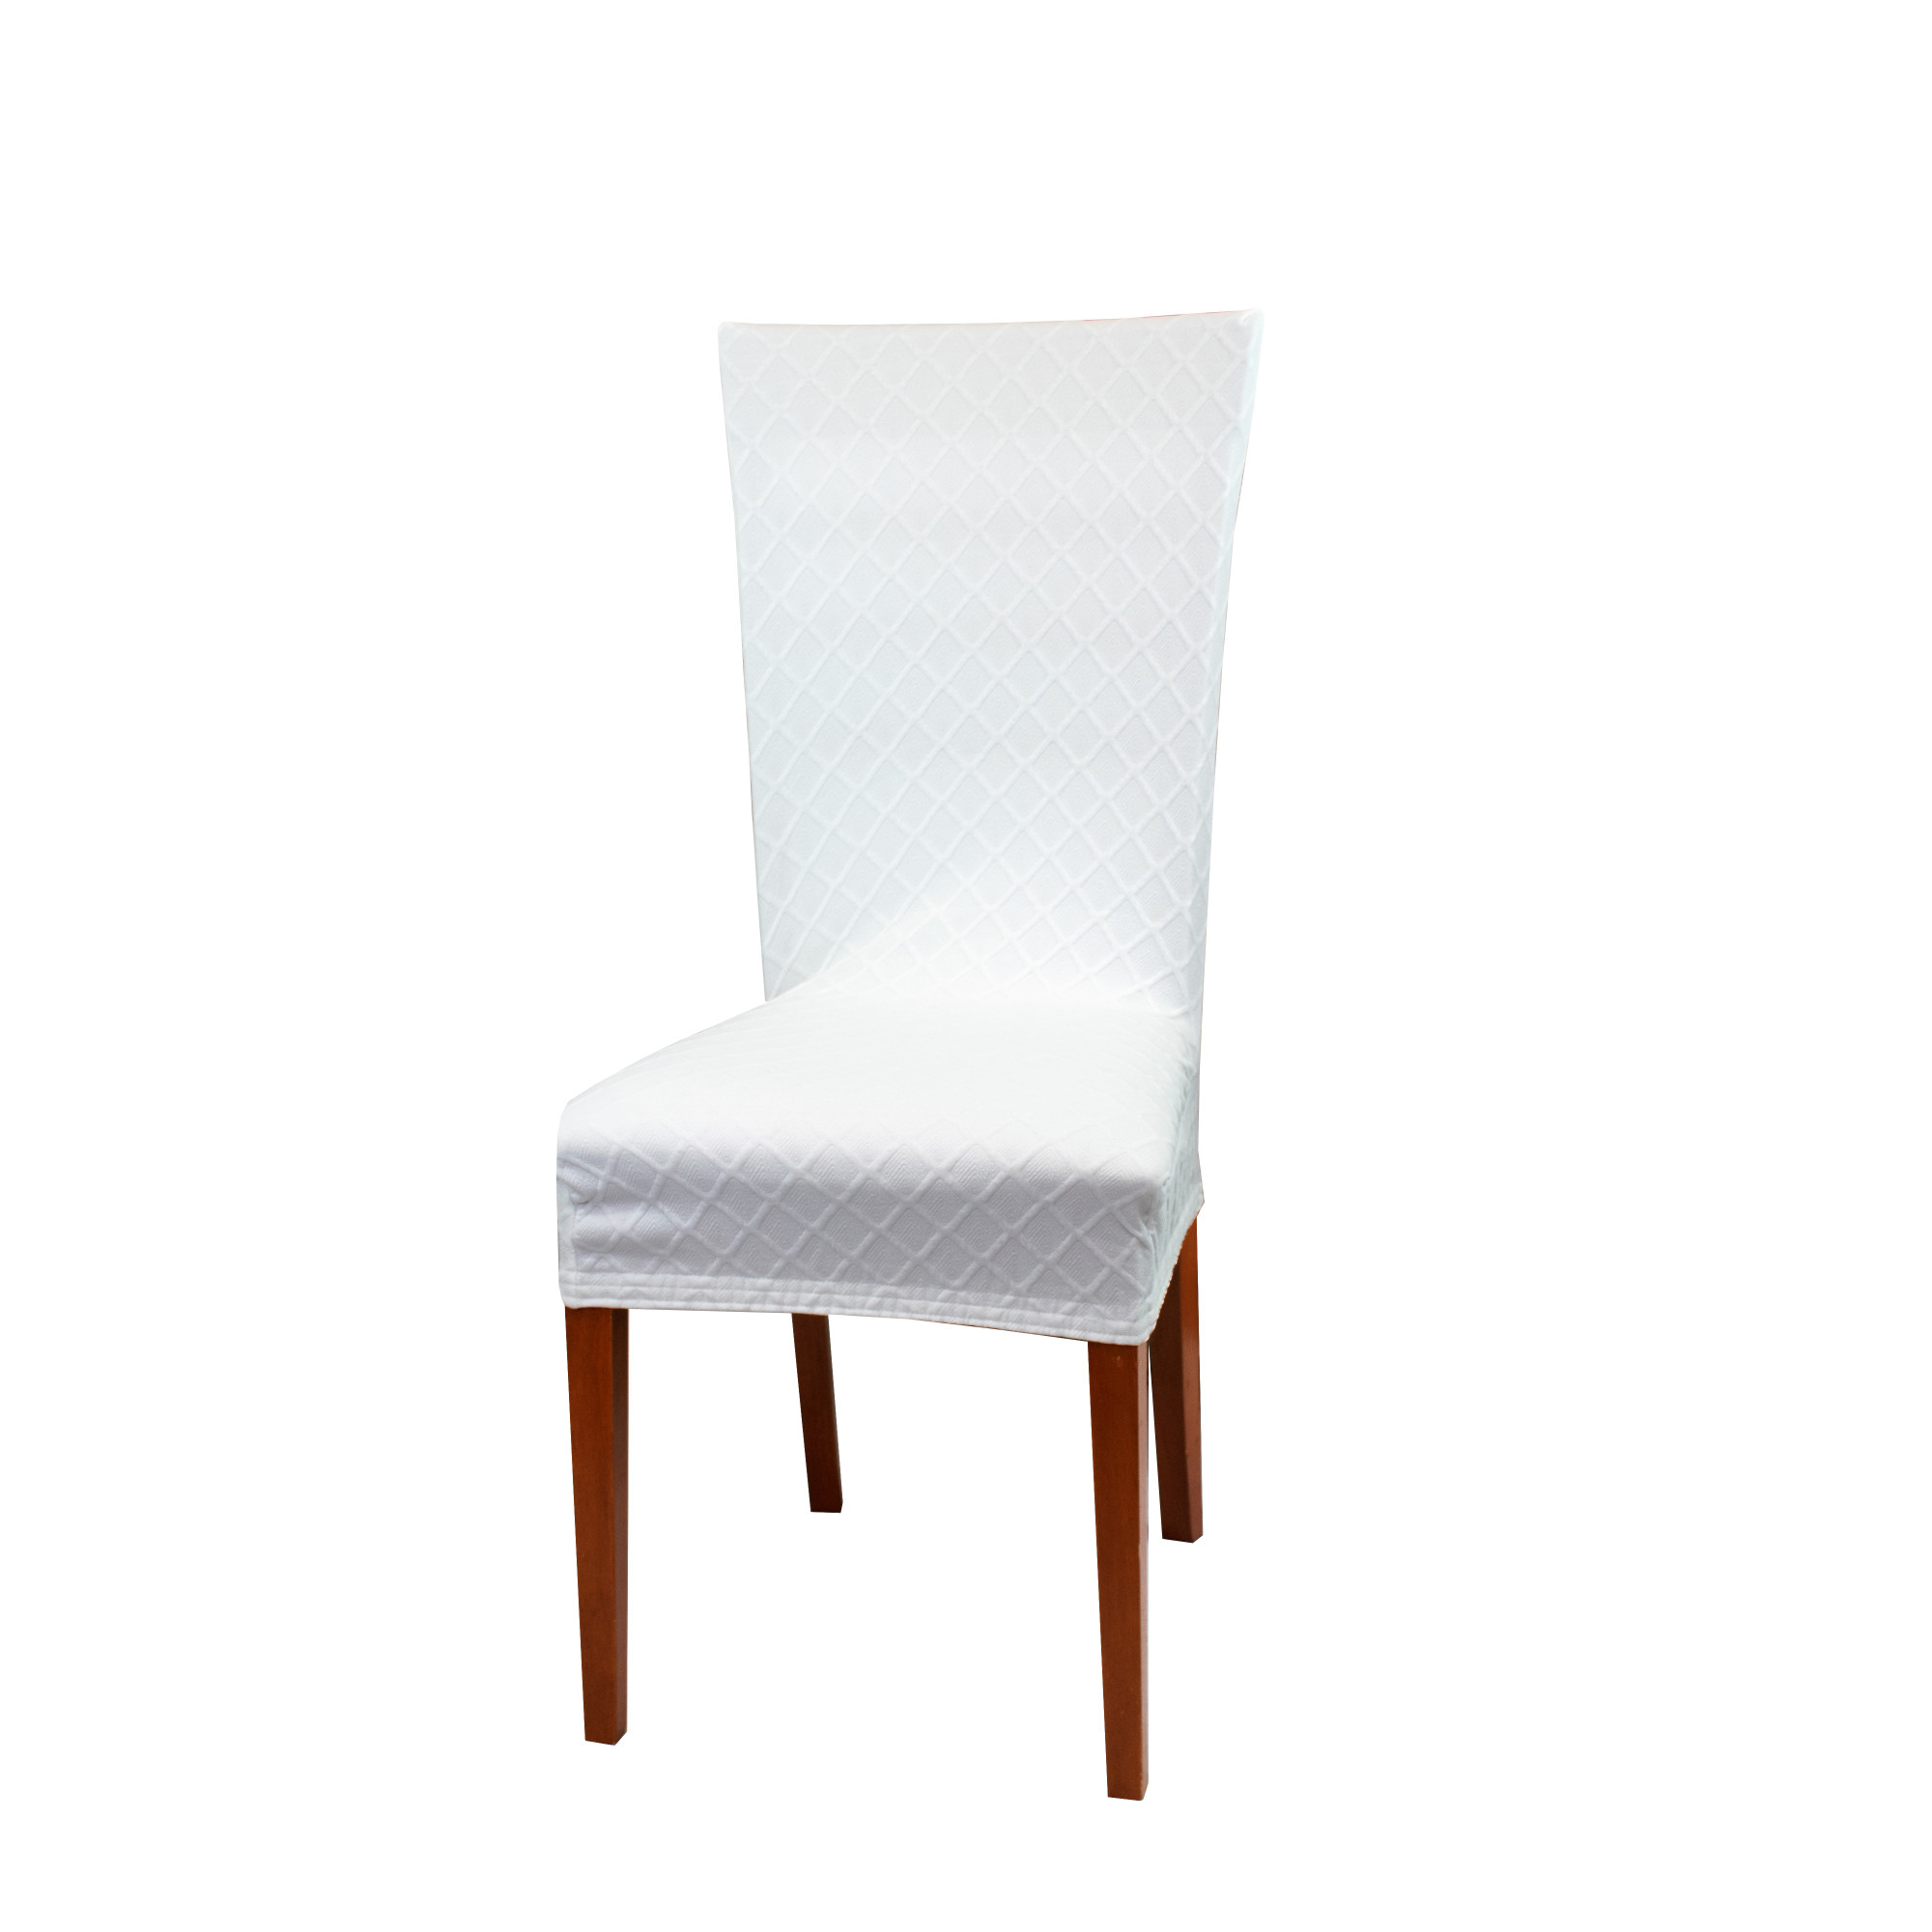 Univerzální elastický potah na židli Káro - Bílá